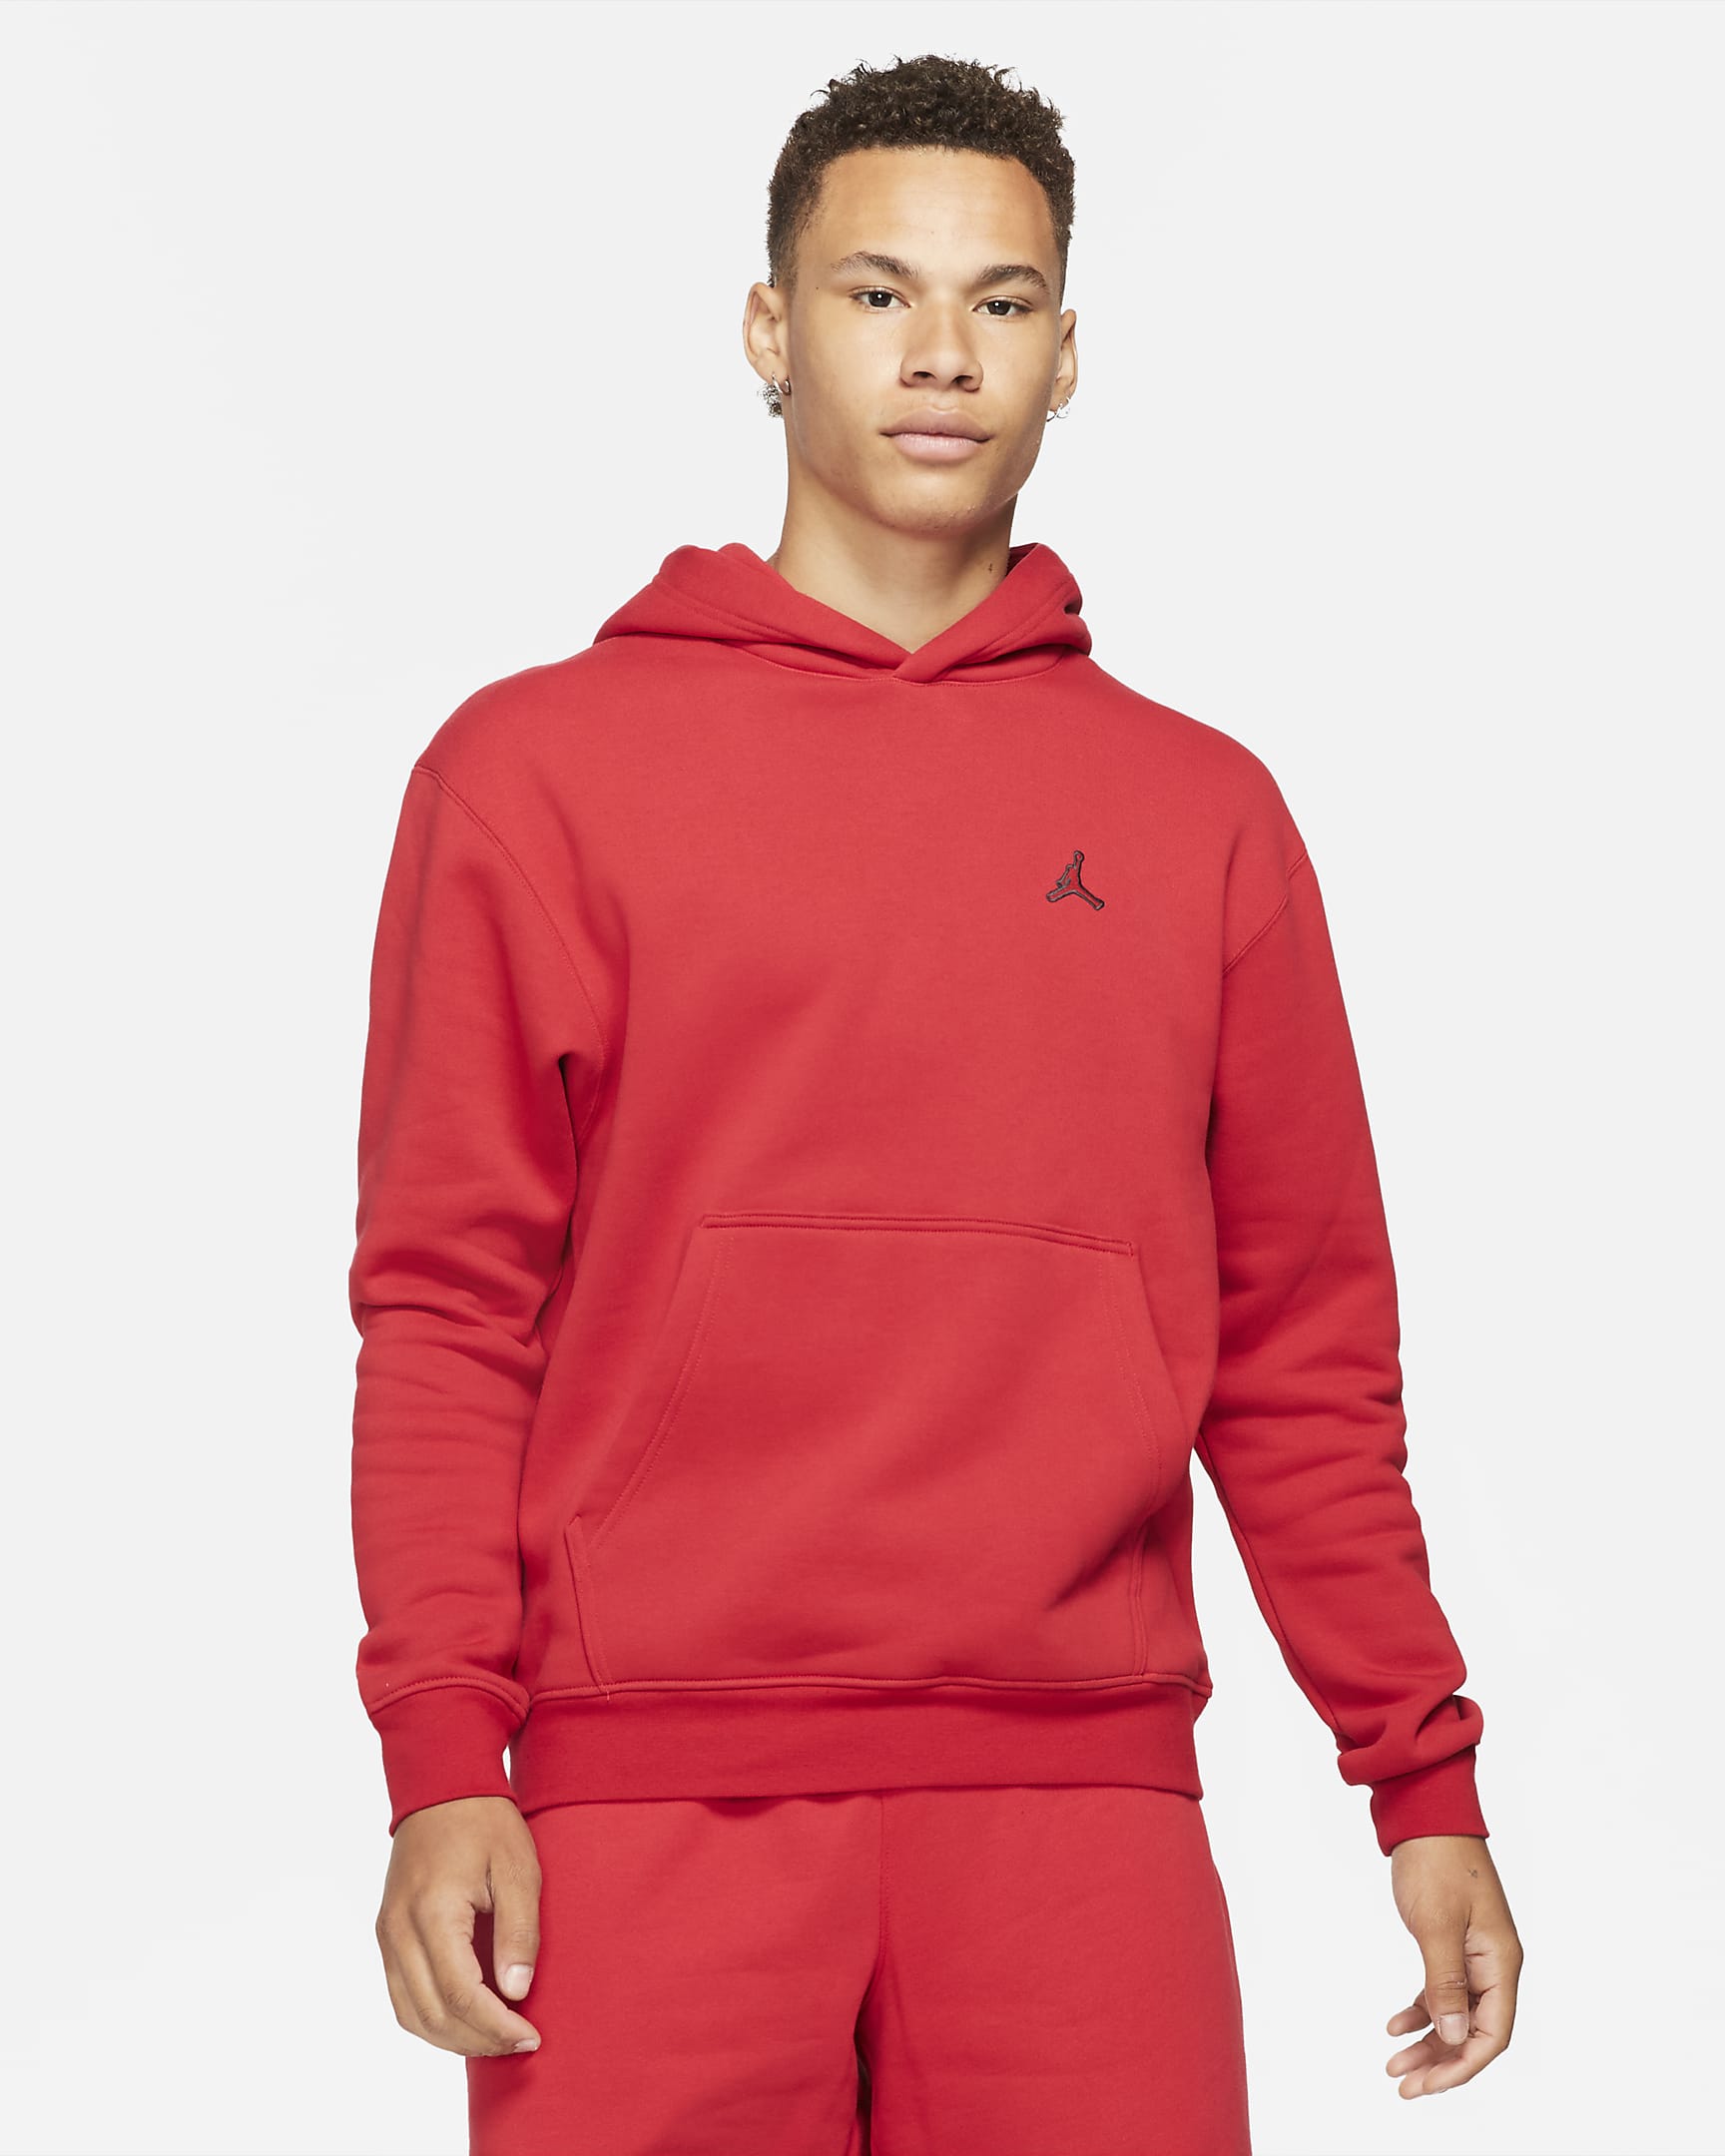 Nike Men's Hoodie: Jordan Essentials (Red) $29.60, Sportswear Sport Essentials (Black/White) $25.60 & More + Free Shipping